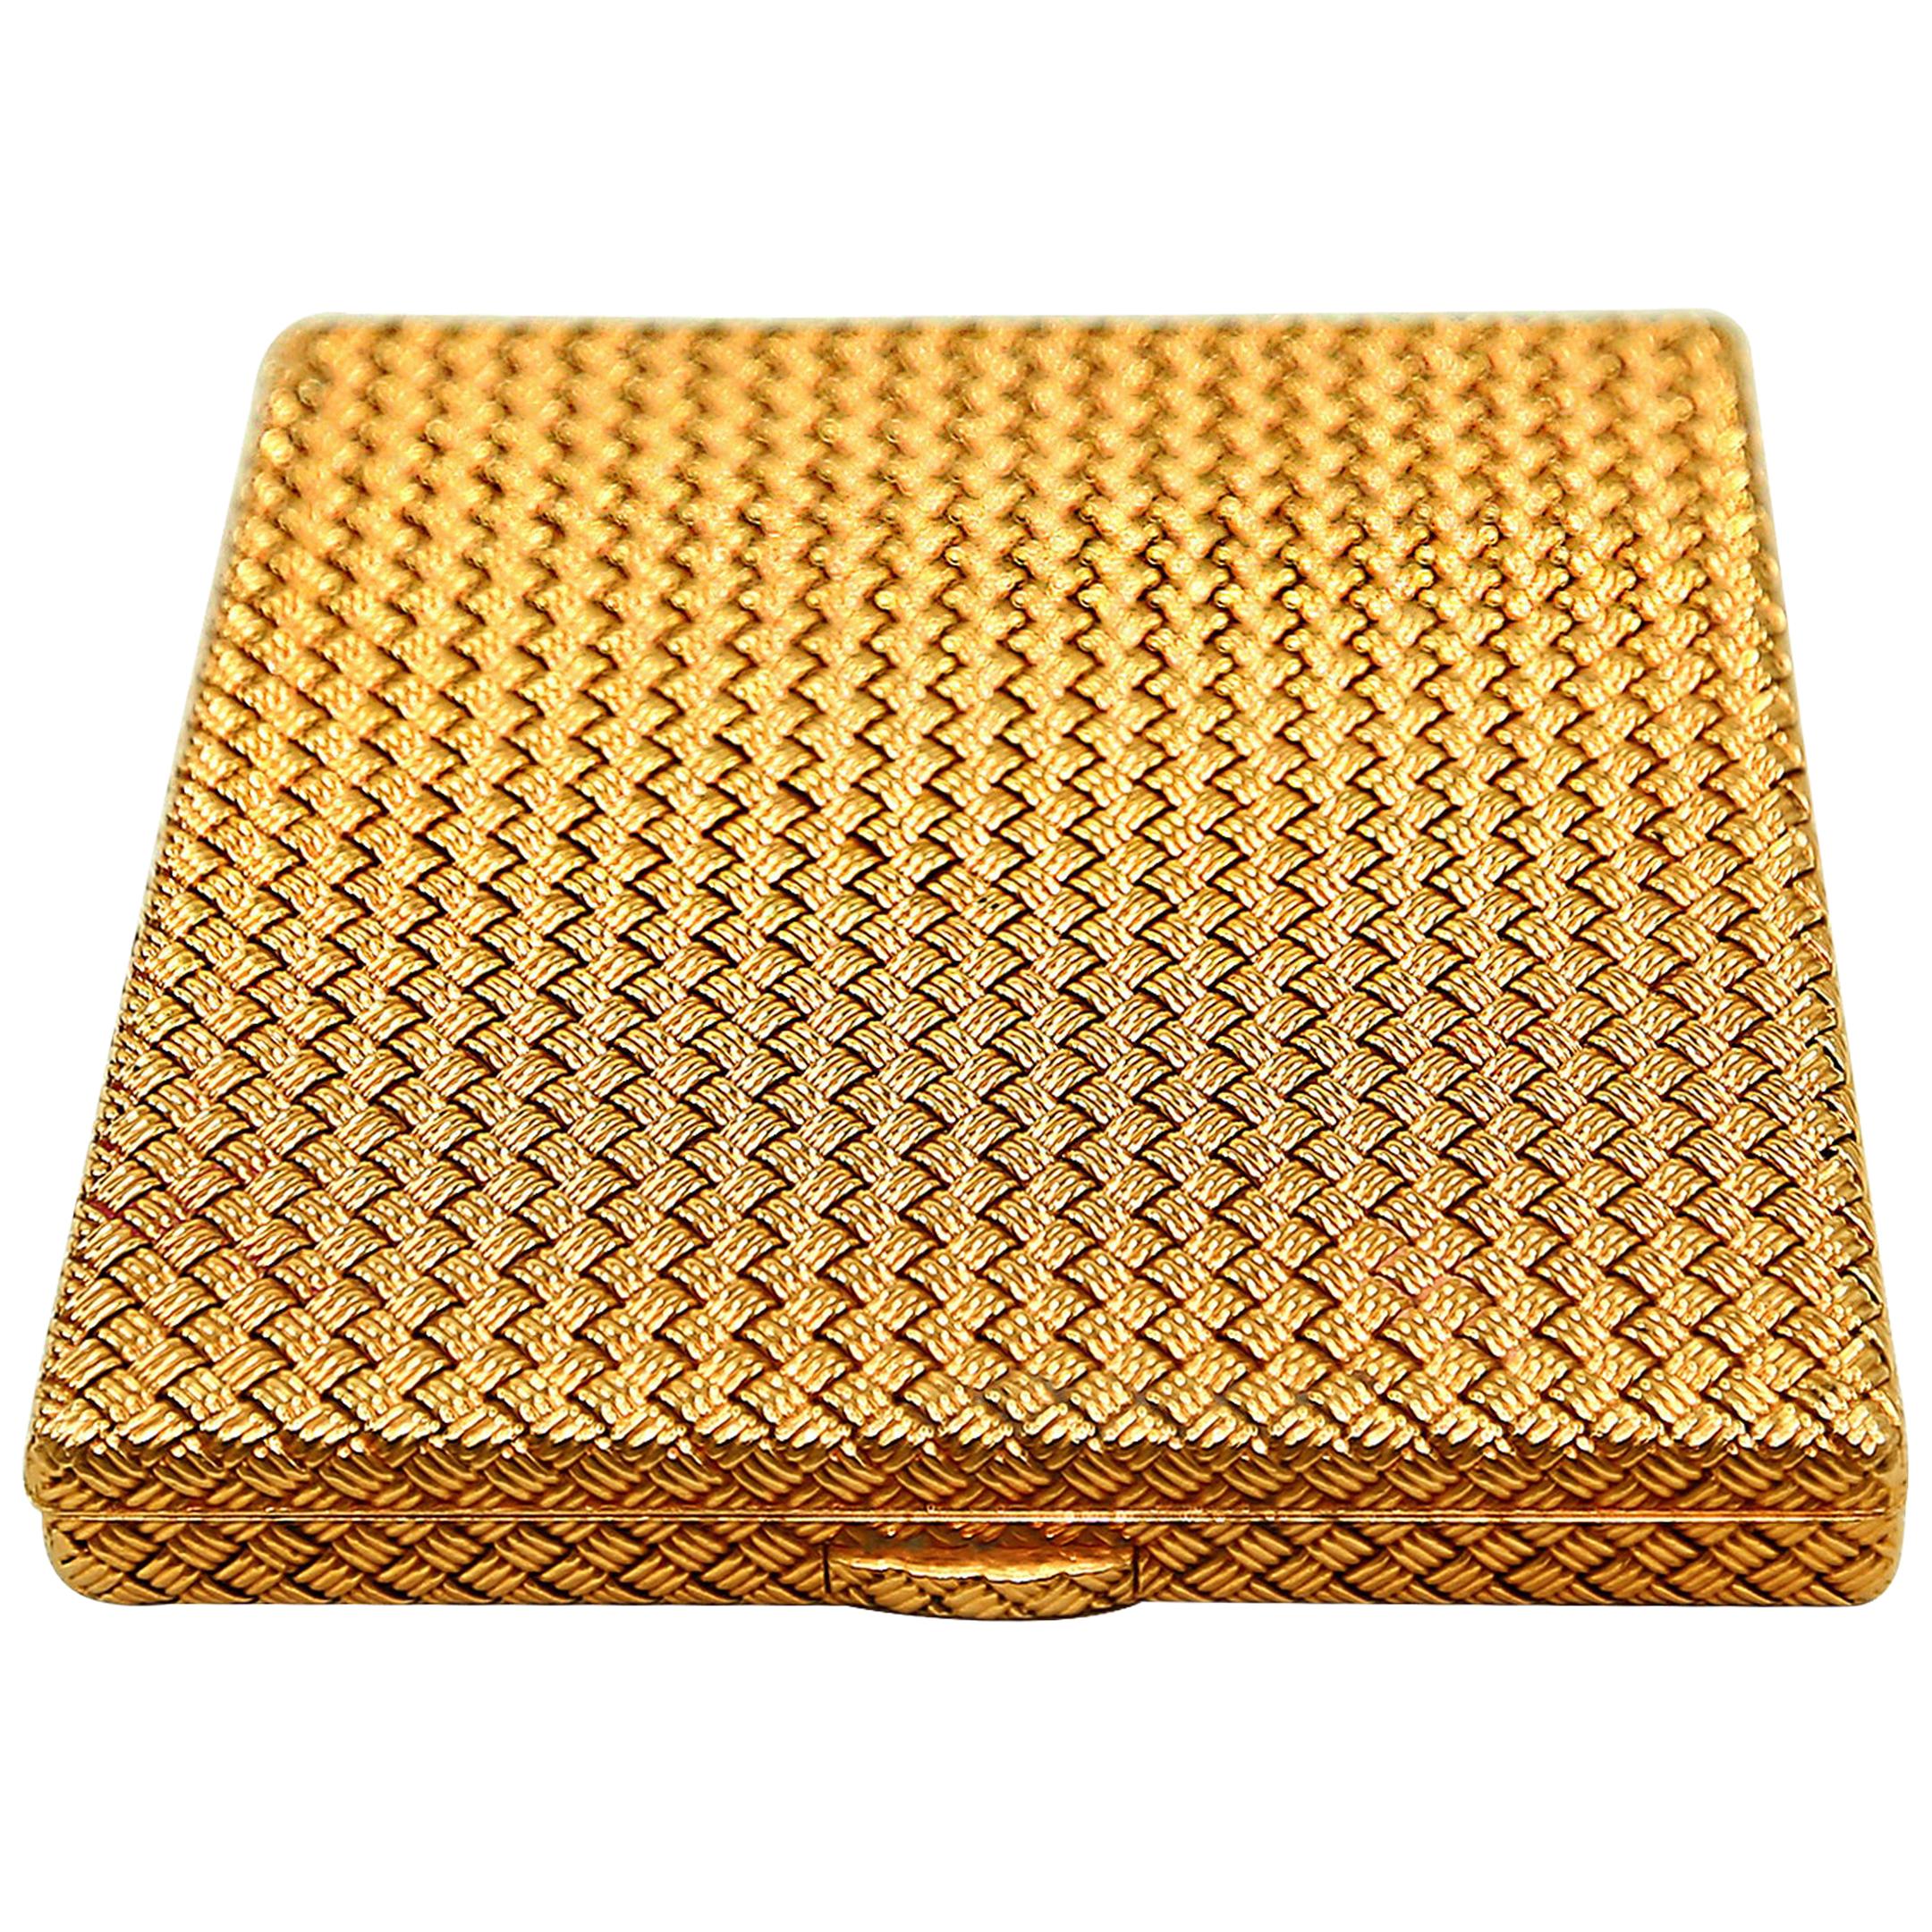 Van Cleef & Arpels Gold Compact Powder Box 18 Karat Gold Make-Up Compact 148Gm